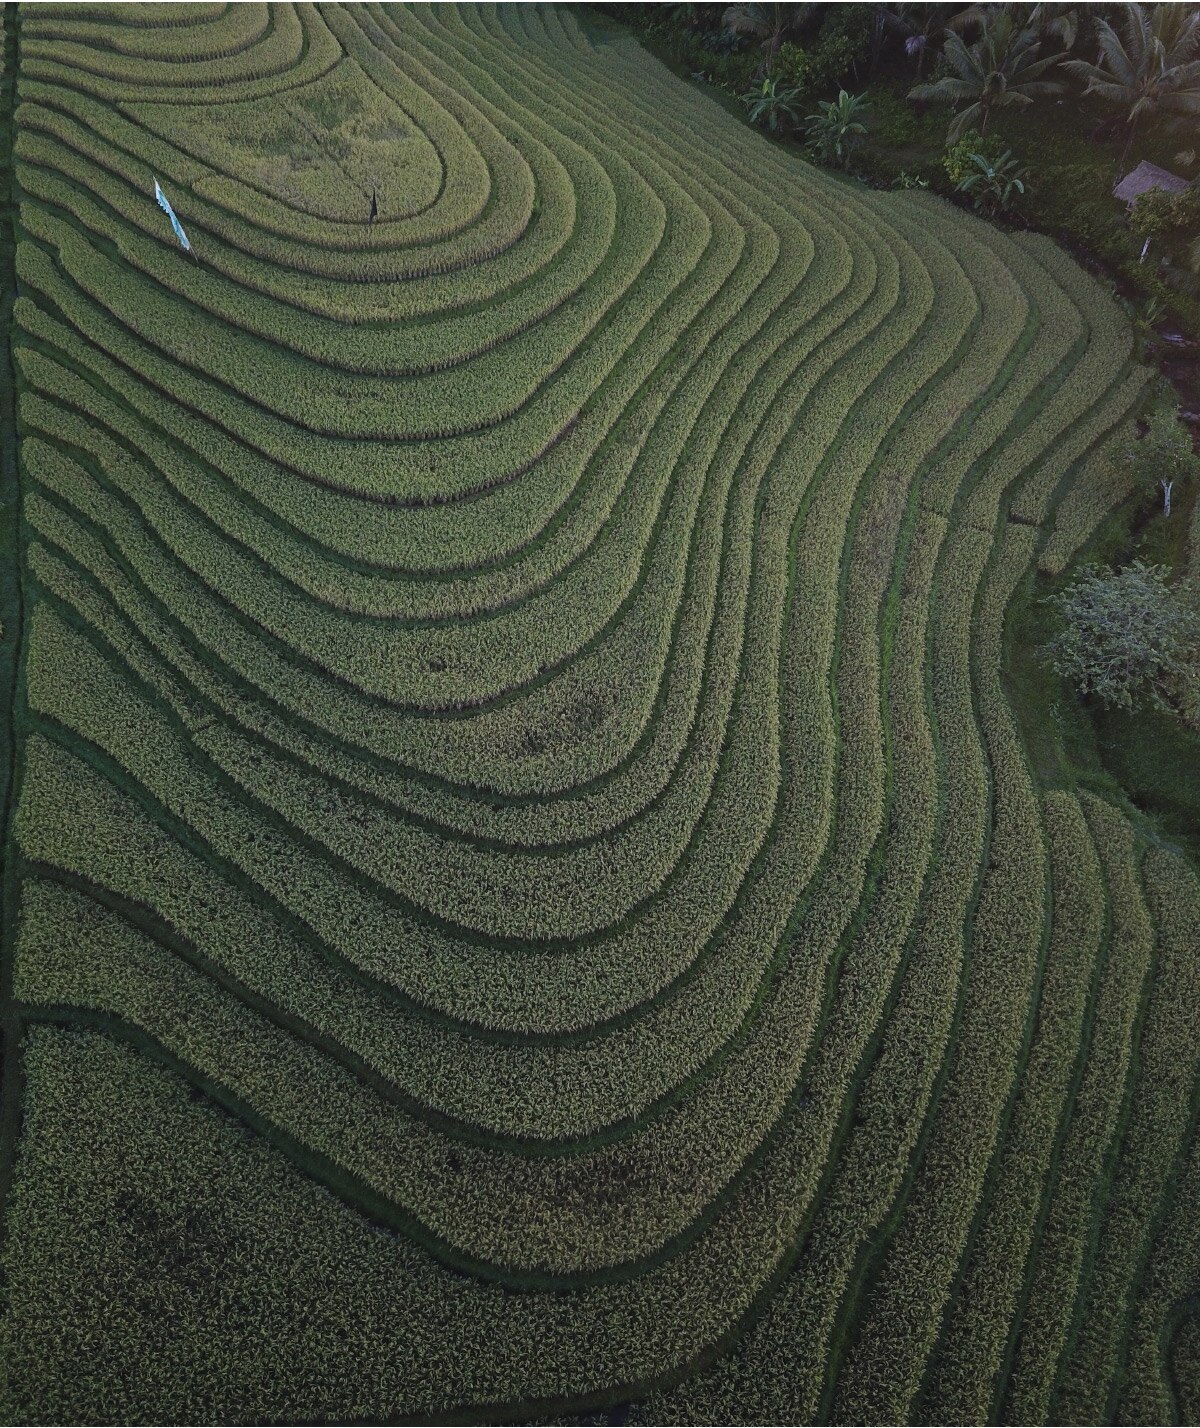 Sesandan village rice terraces